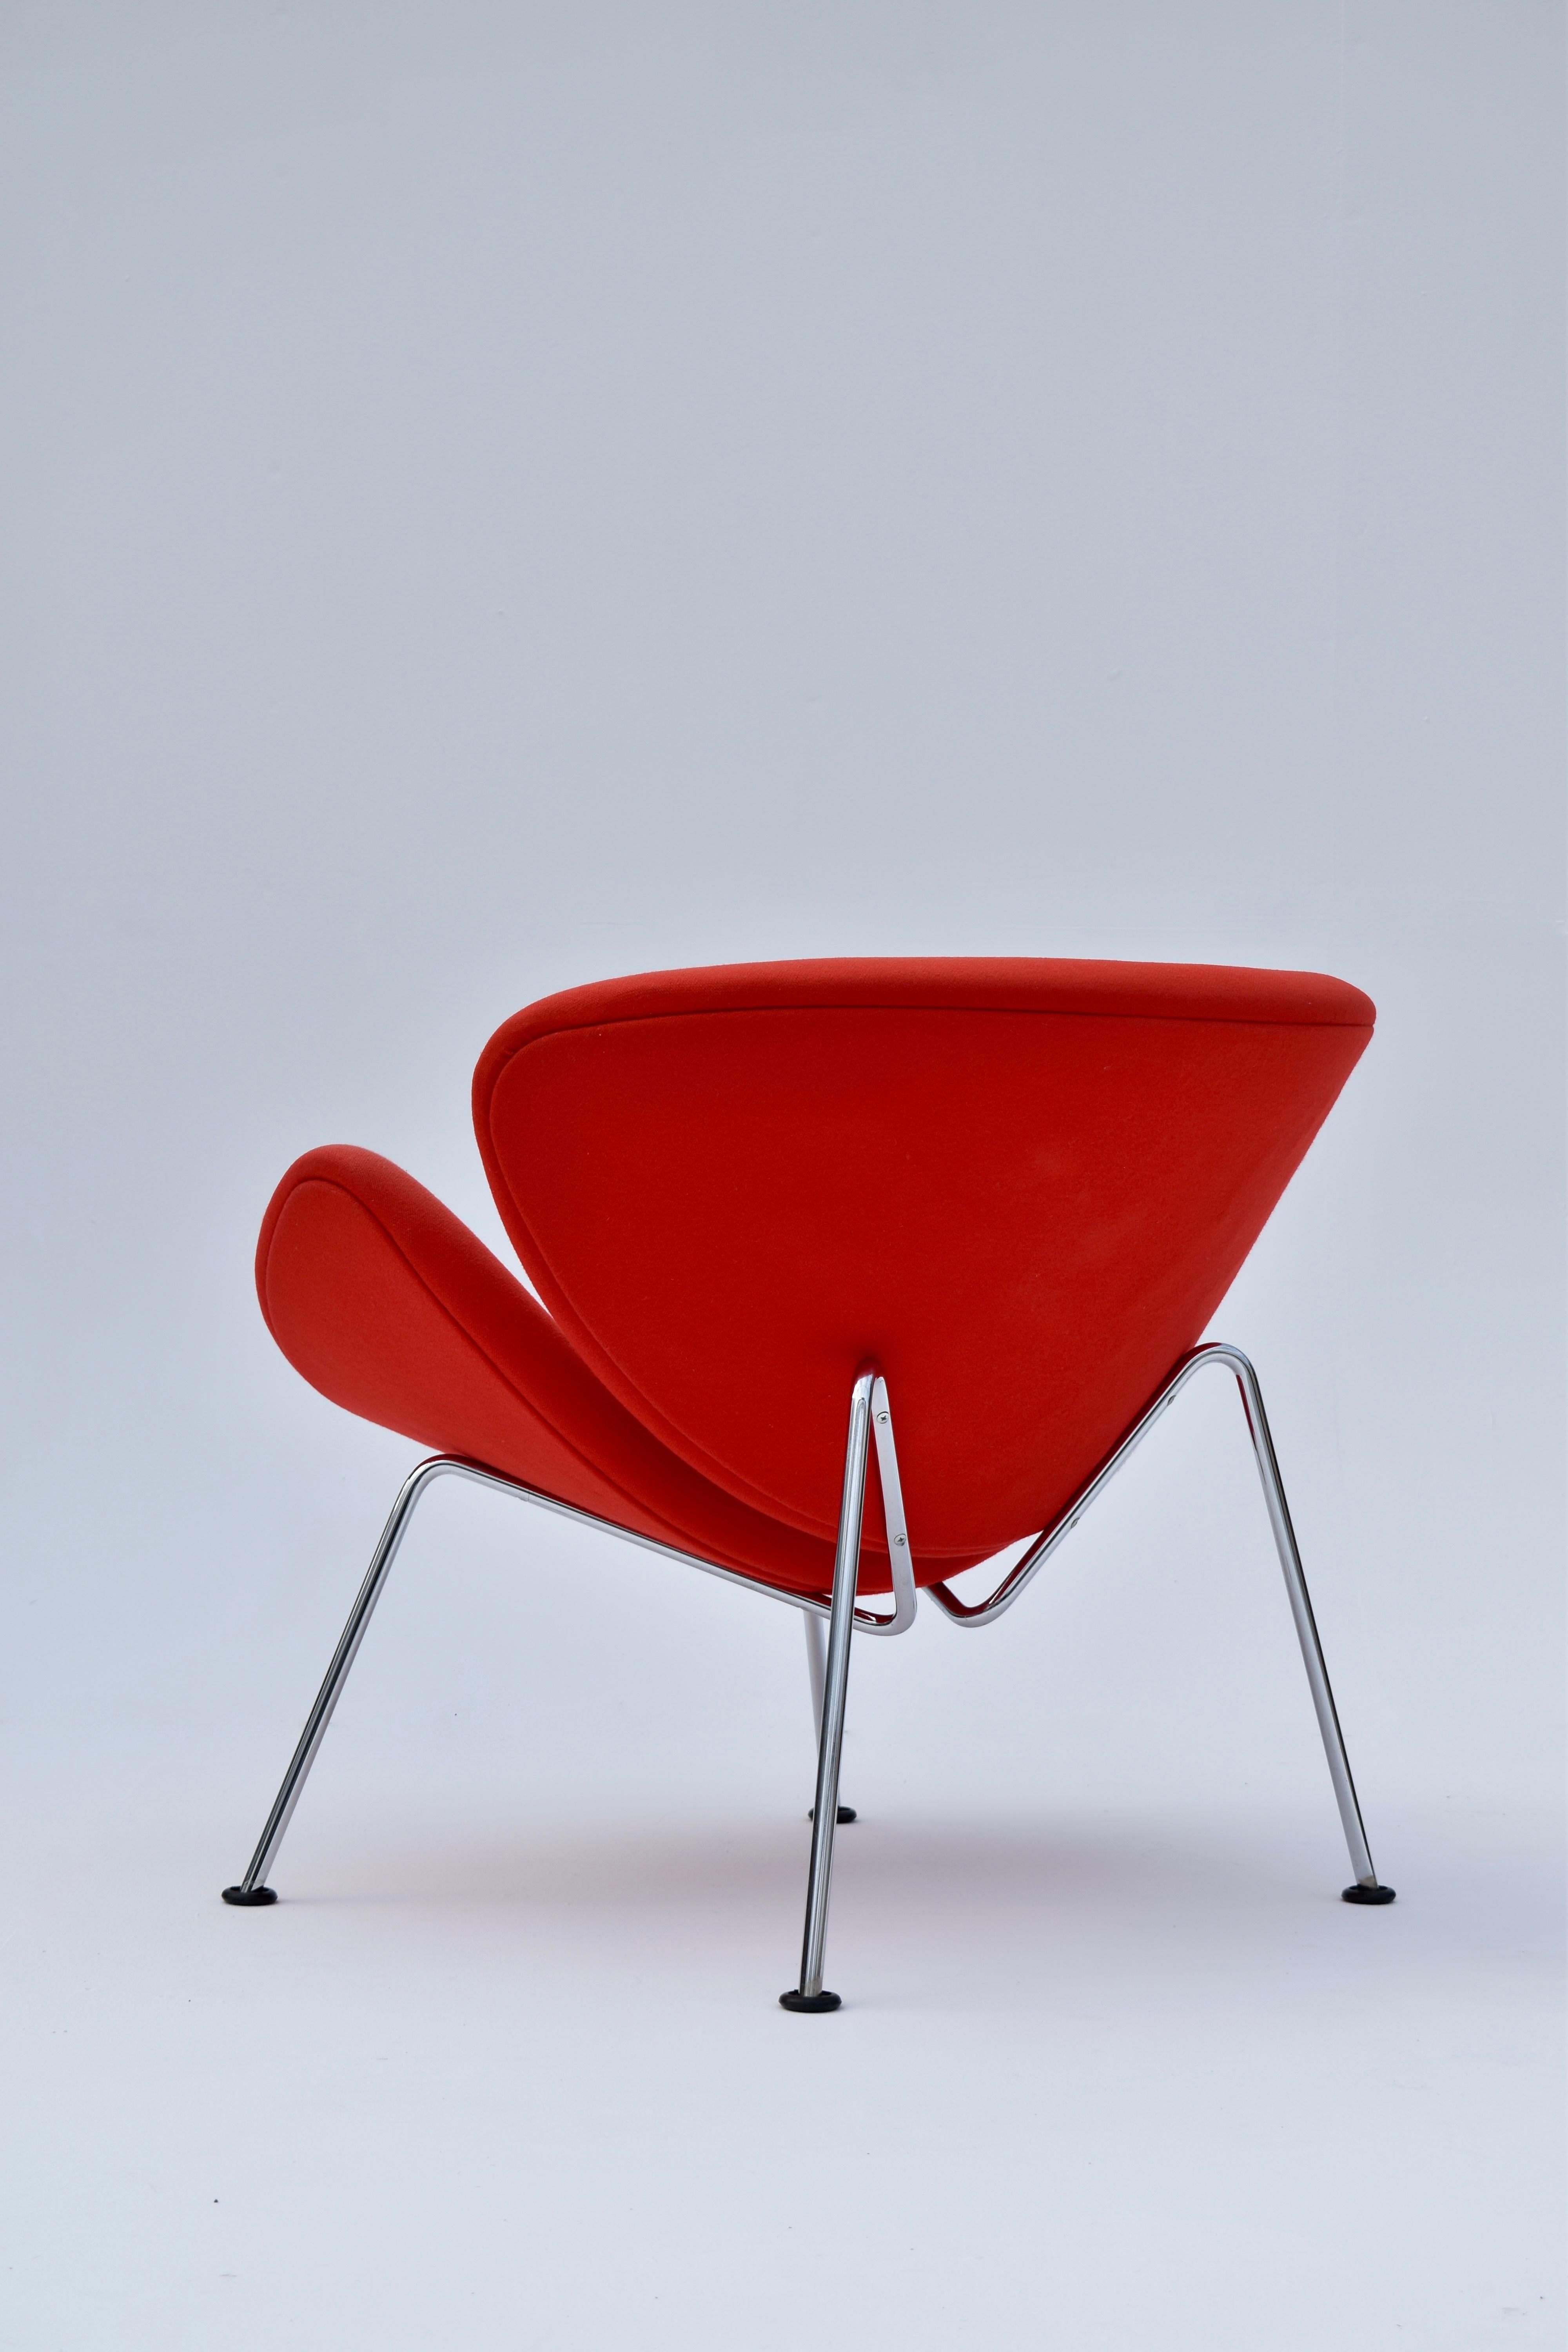 Steel Pierre Paulin Orange Slice Chair for Artifort